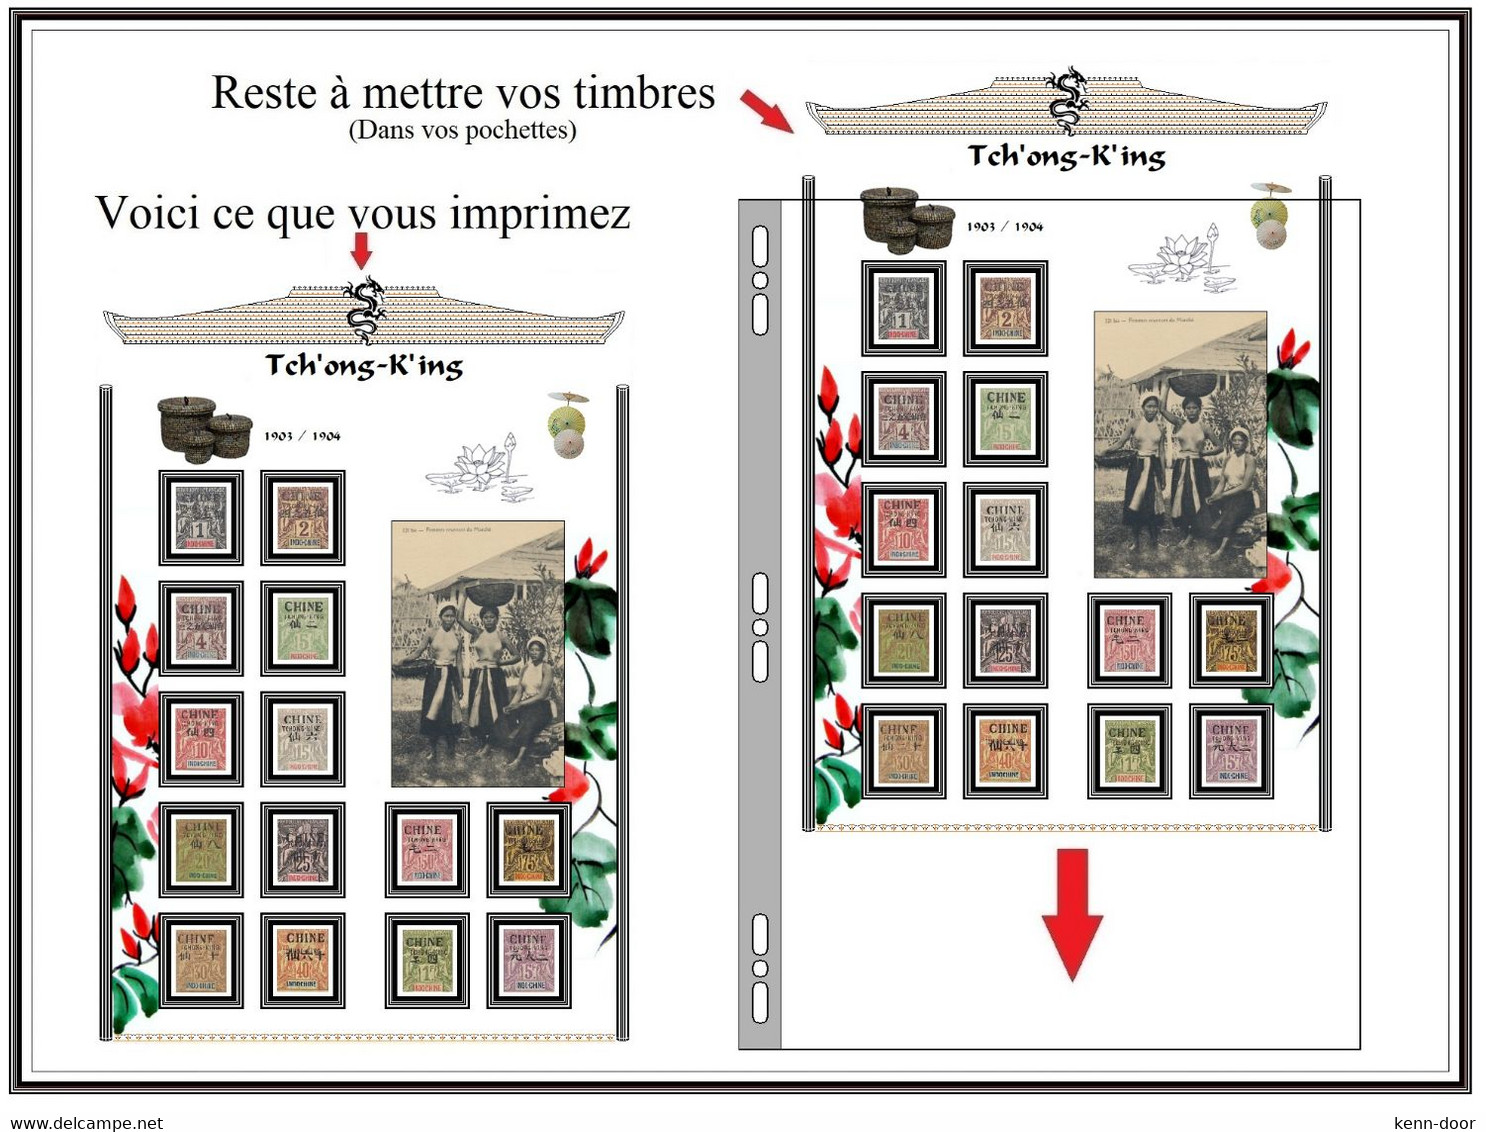 Album de timbres à imprimer   TCH'ONG-K'ING